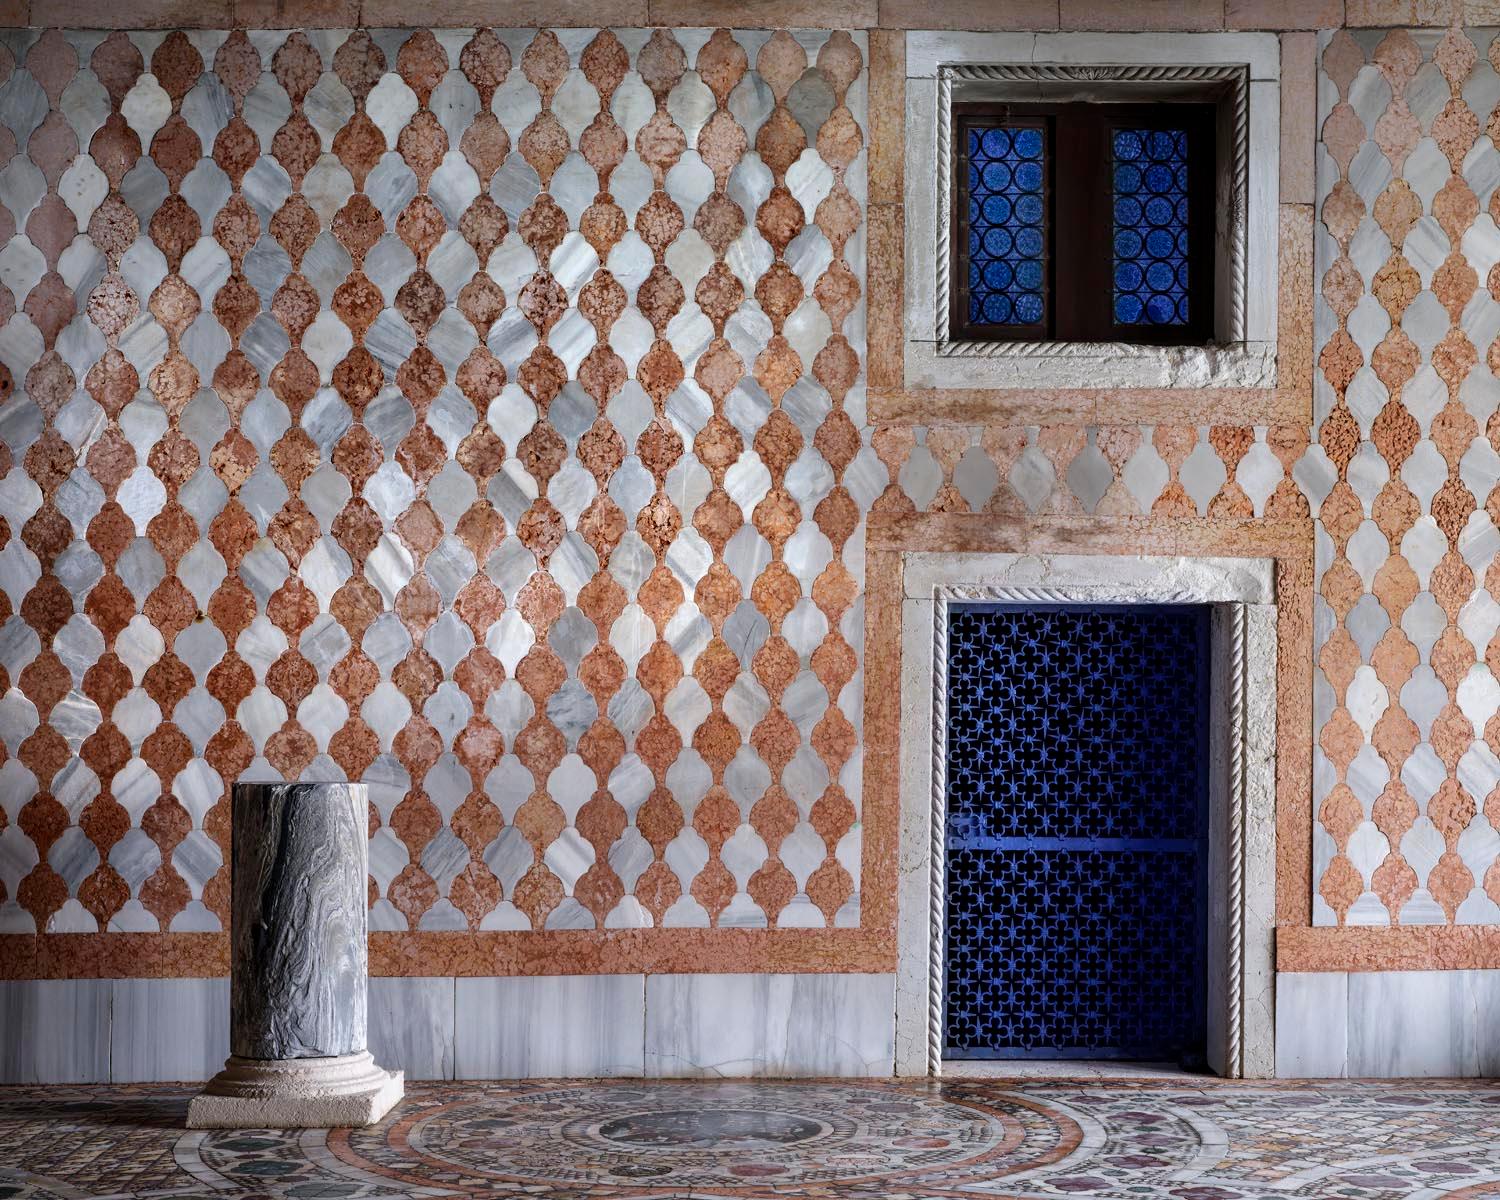 Palazzo C'ad'Oro II, Venice, Italy (Portrait of Interiors)